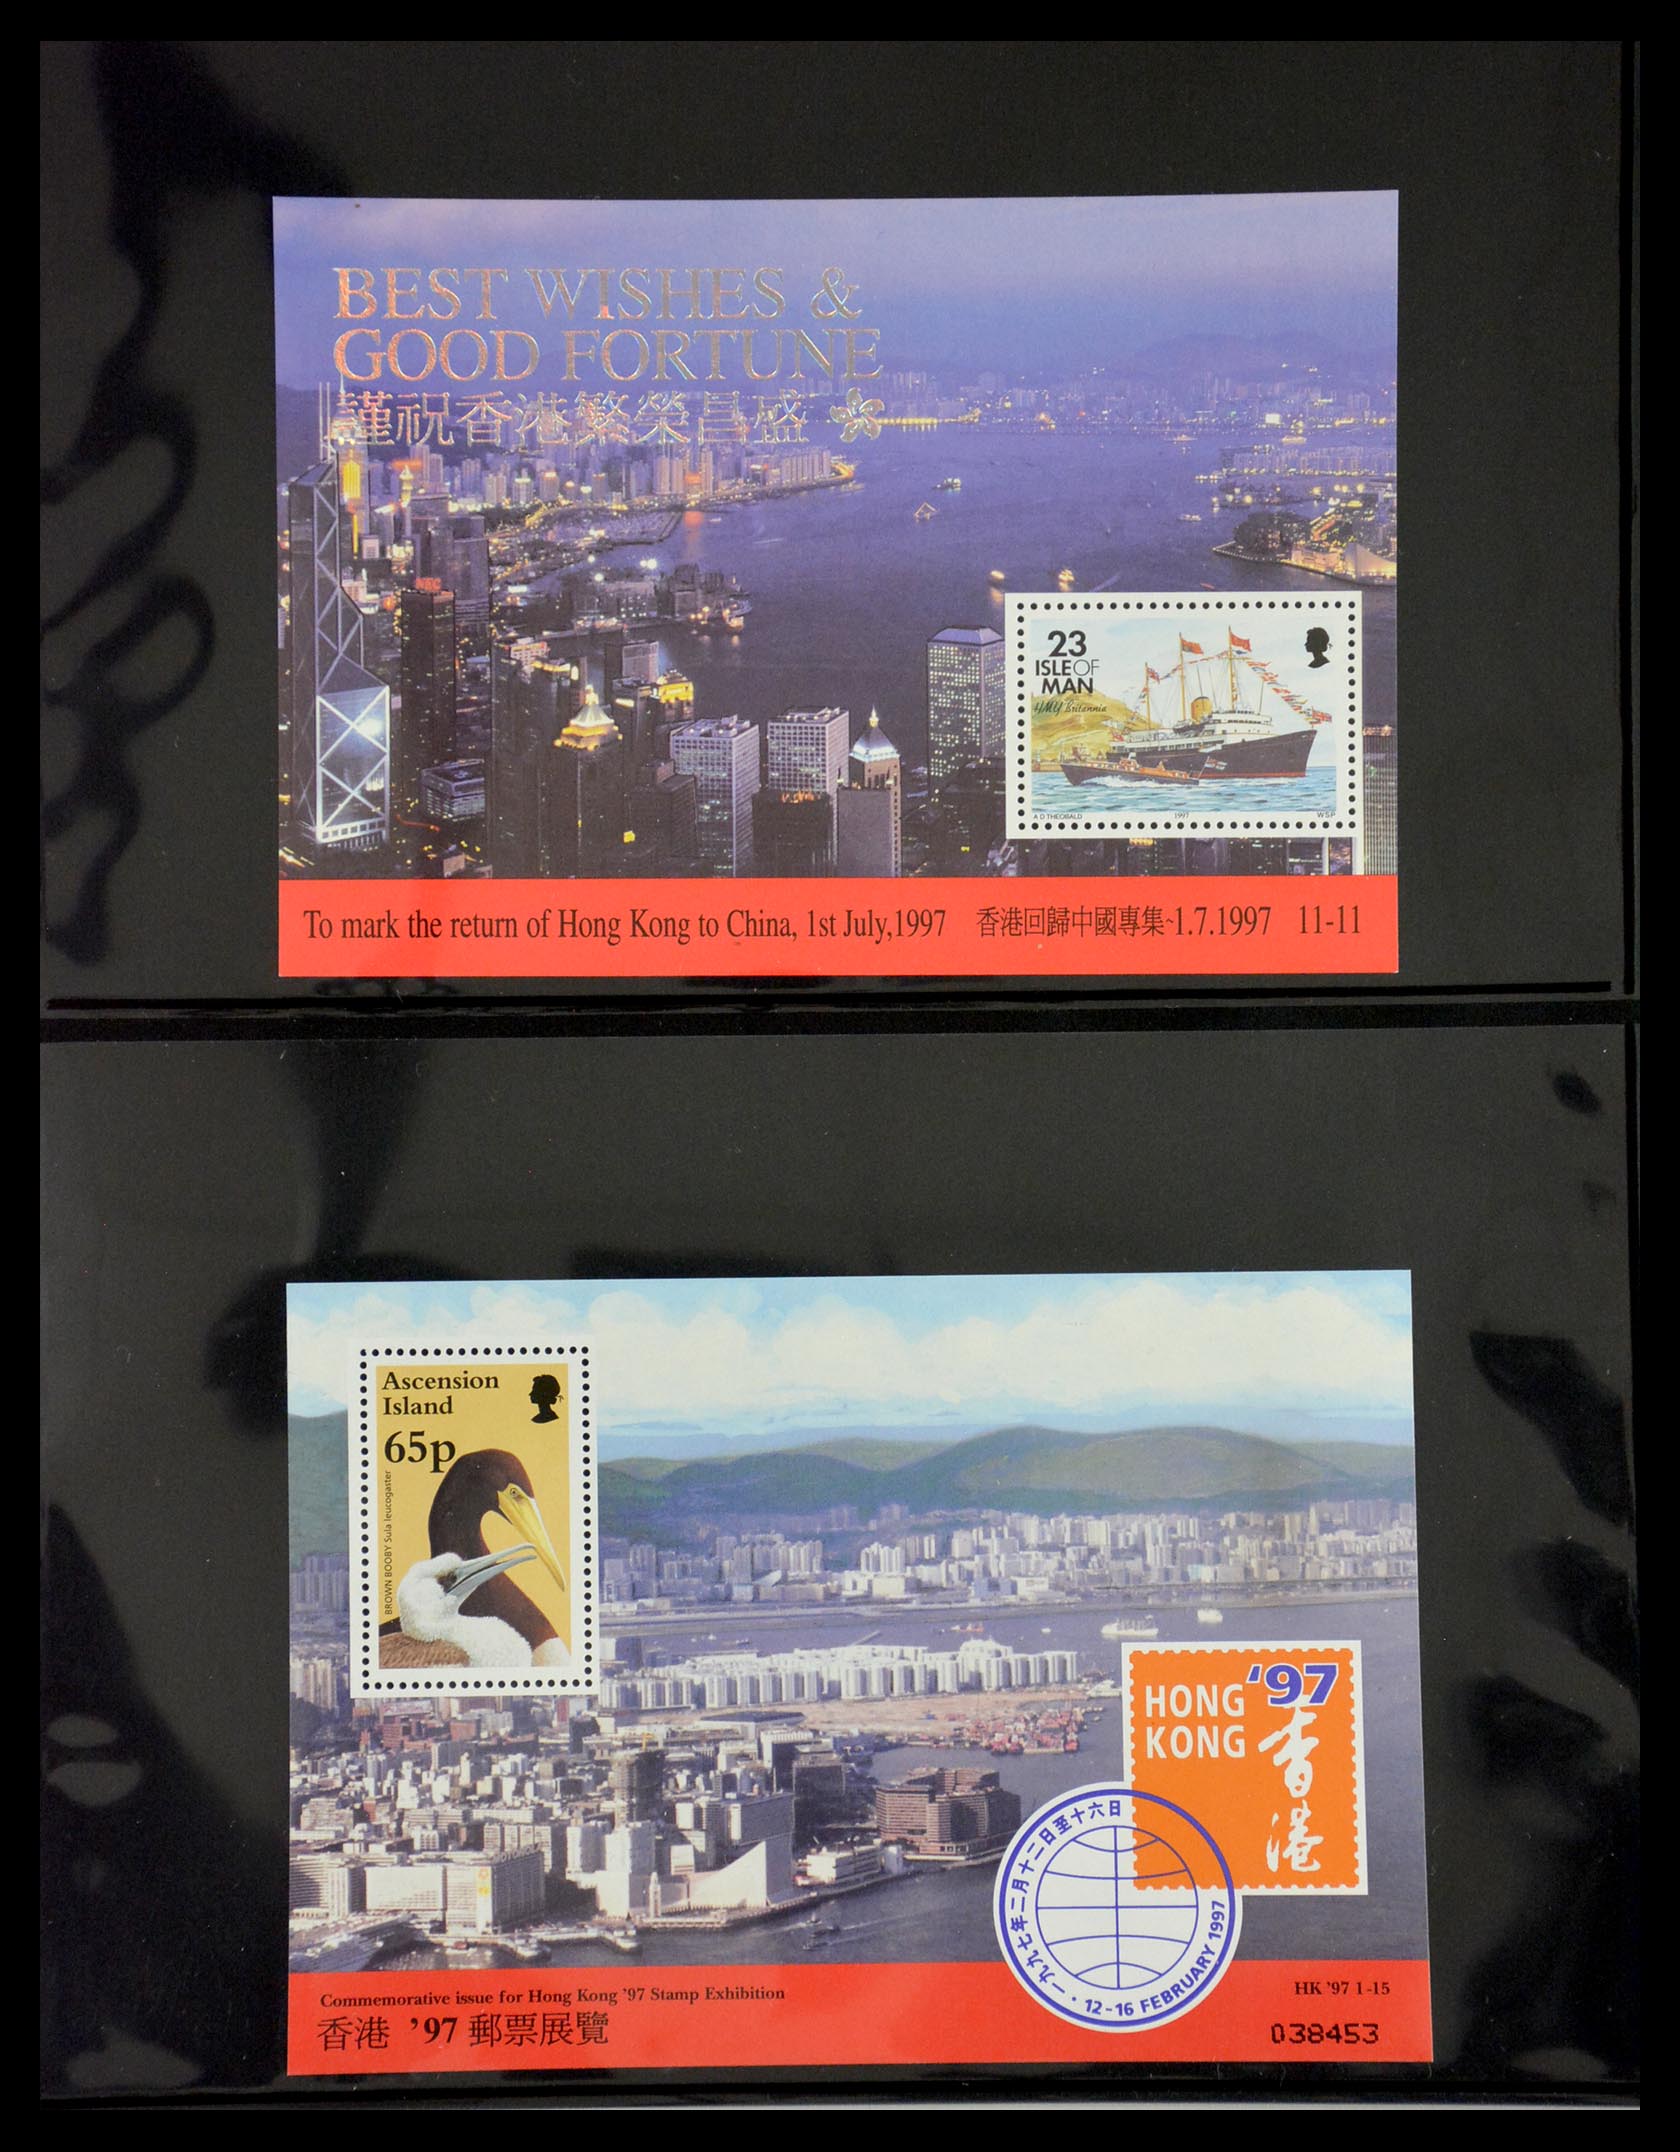 29630 102 - 29630 Hong Kong 1981-2014.